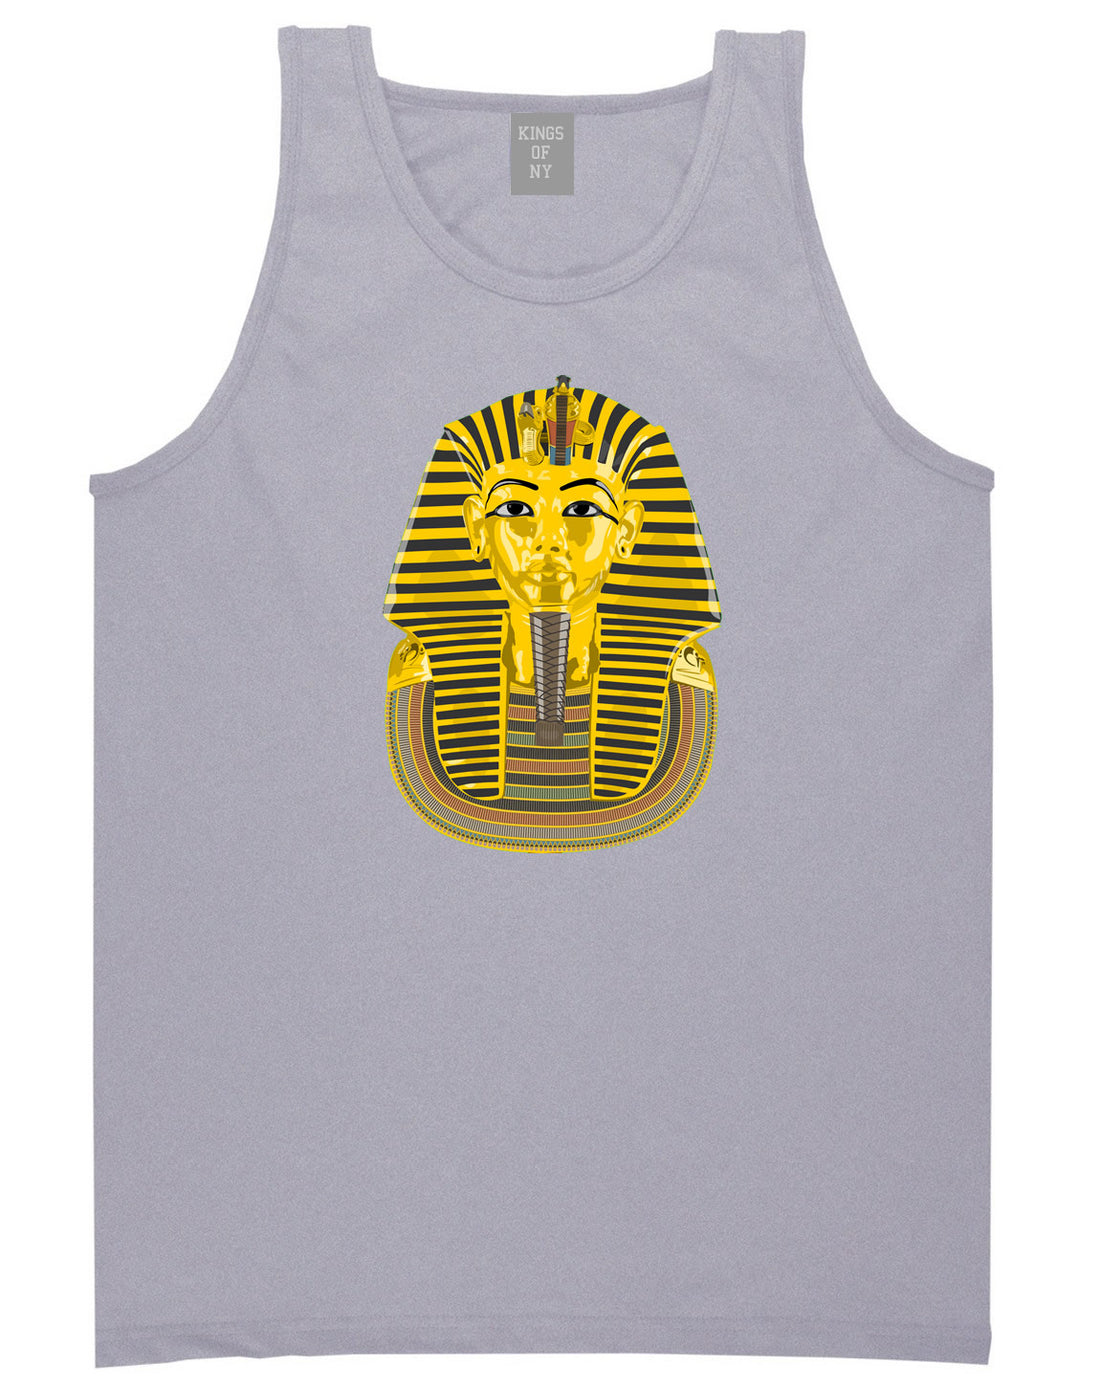 Pharaoh Egypt Gold Egyptian Head  Tank Top In Grey by Kings Of NY